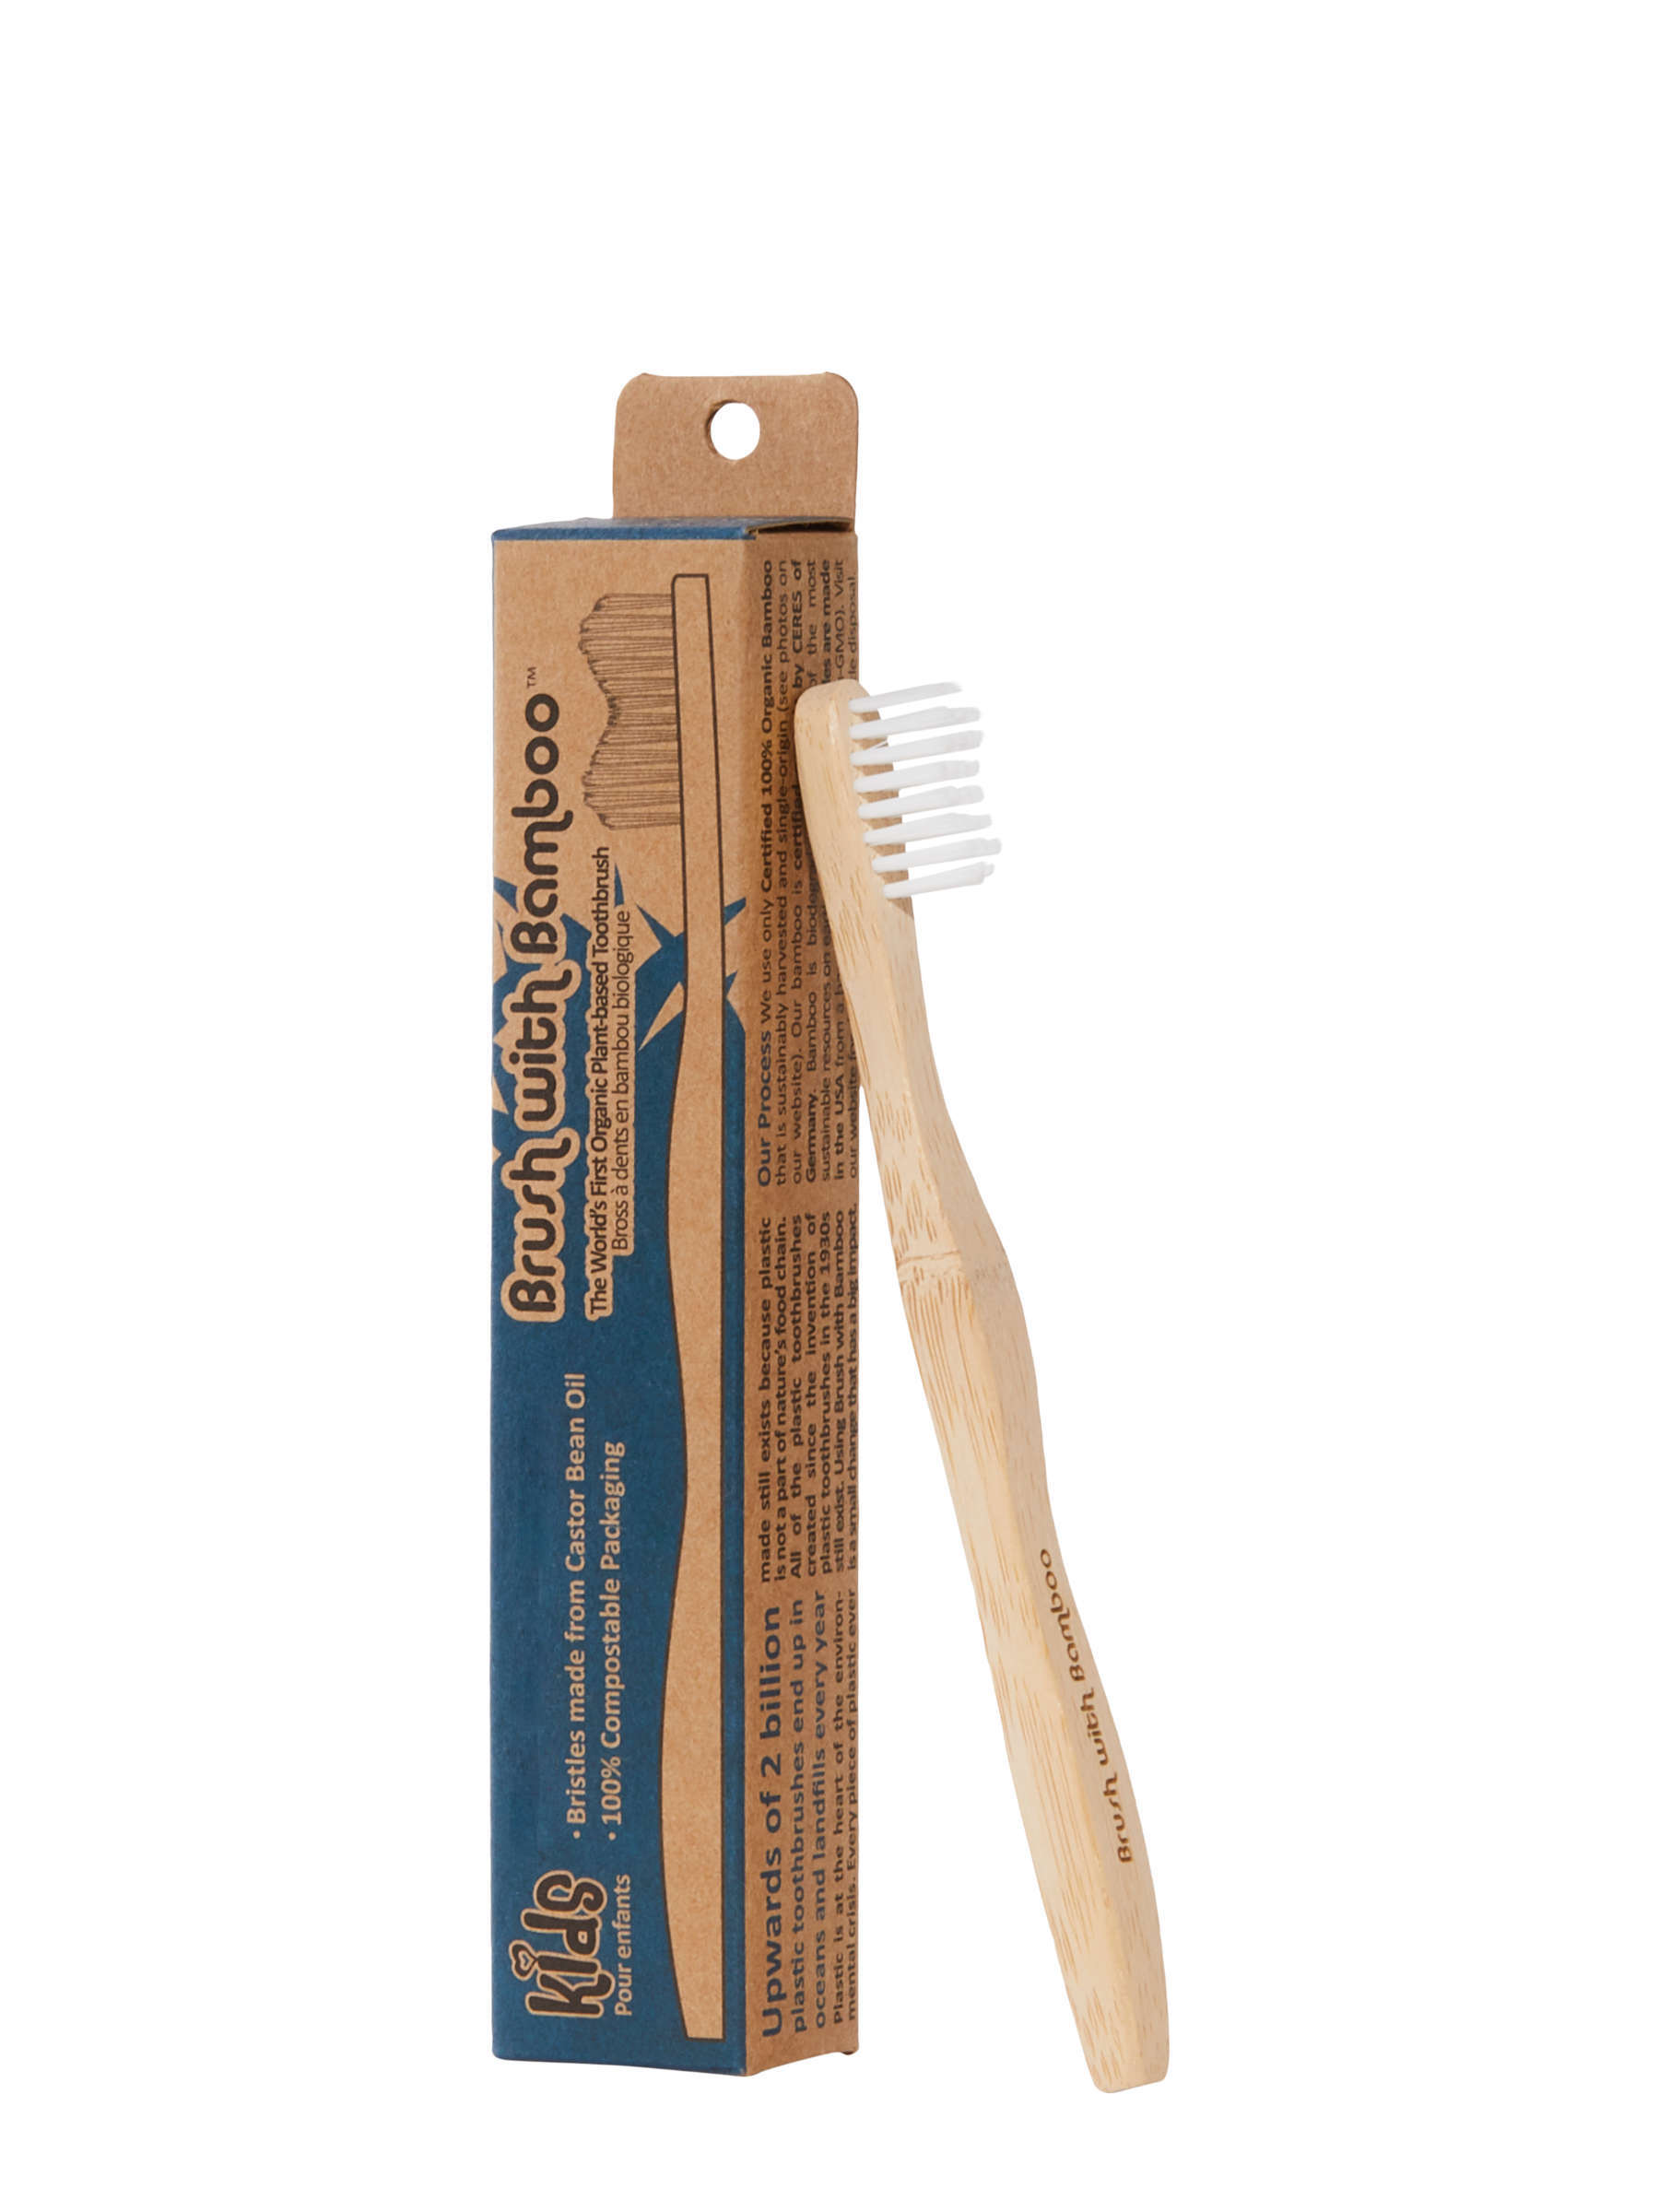 Bamboo Toothbrush - Kids - Standard Soft - Brush with Bamboo